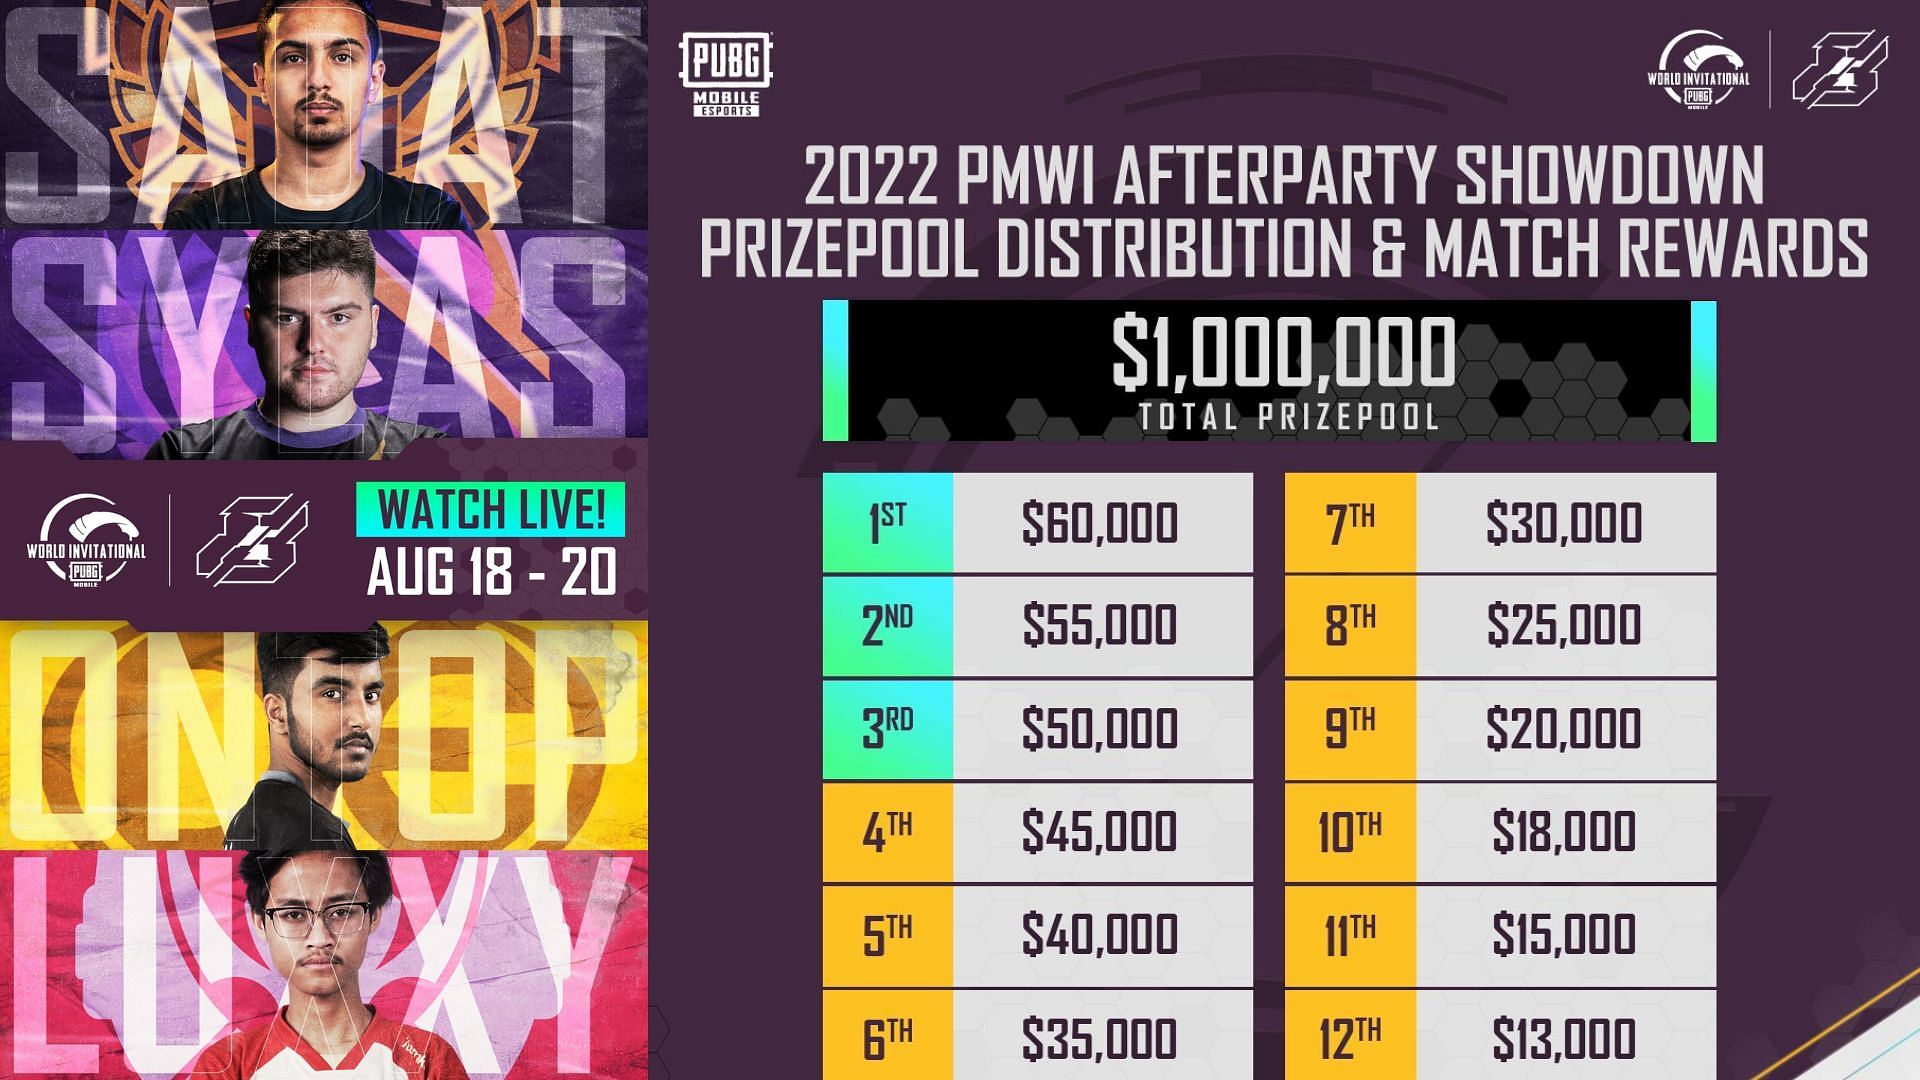 PMWI 2022 Afterparty Showdown prize pool distribution revealed (Image via Sportskeeda)